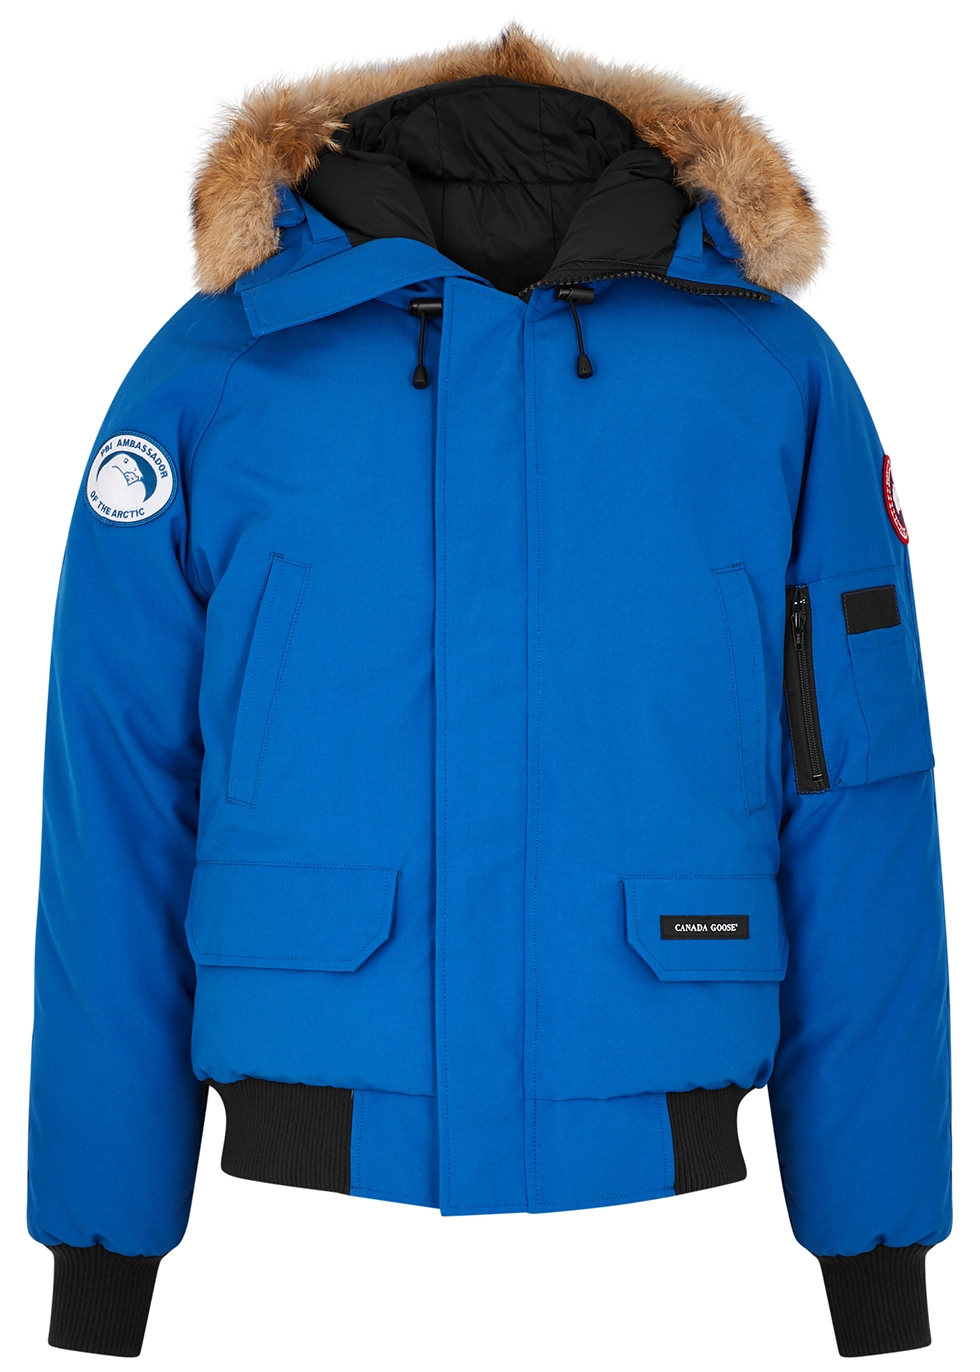 Canada Goose PBI Chilliwack fur-trimmed Arctic-Tech bomber jacket